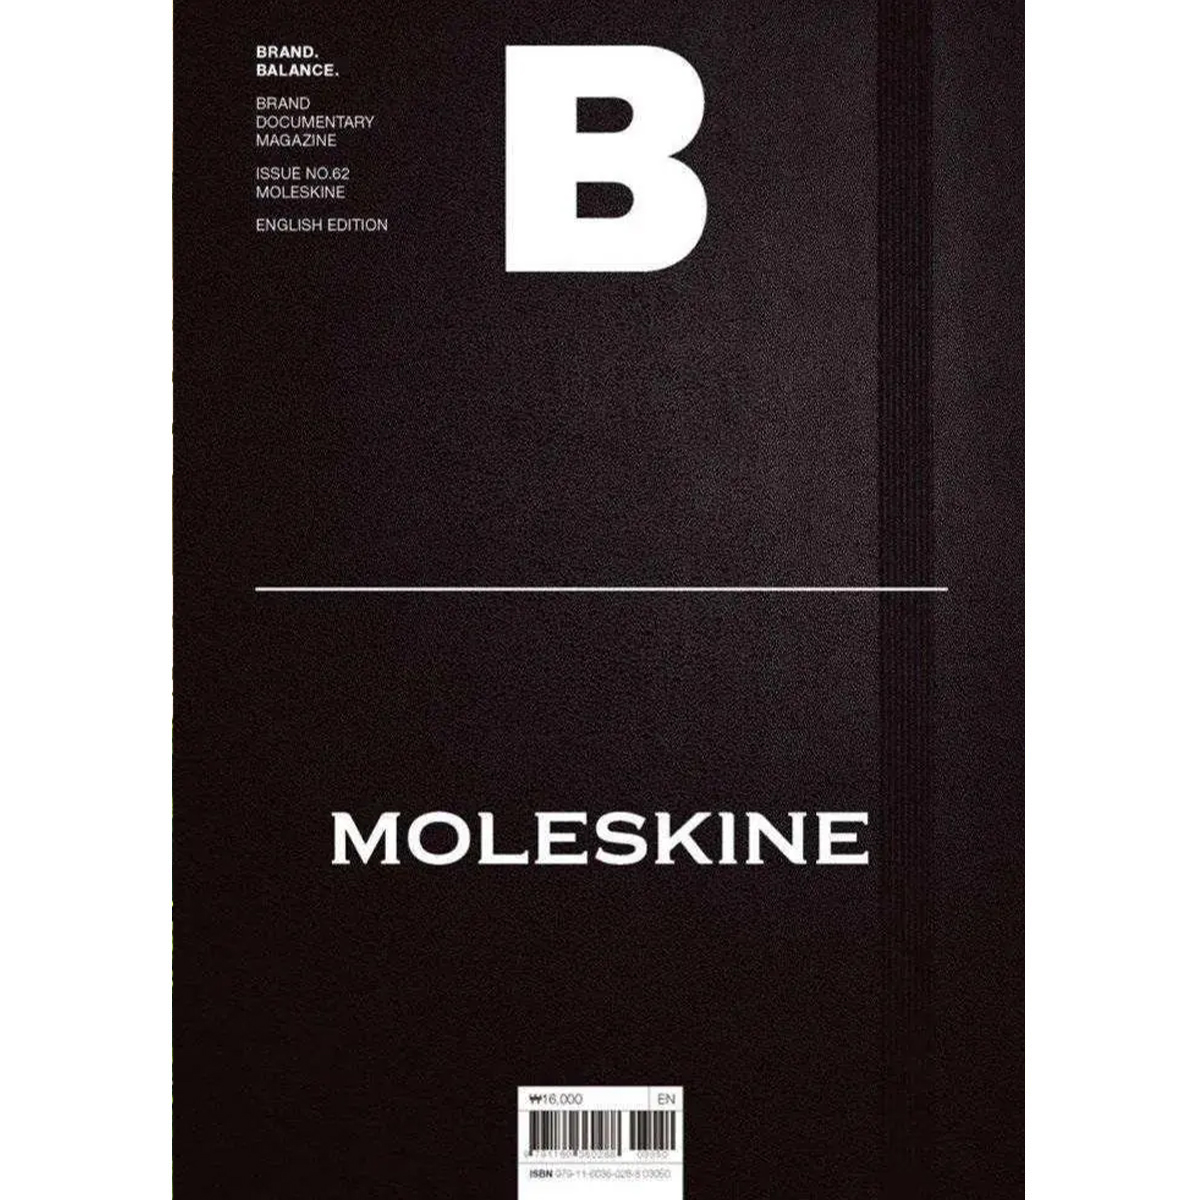 Issue N 62 MOLESKINE